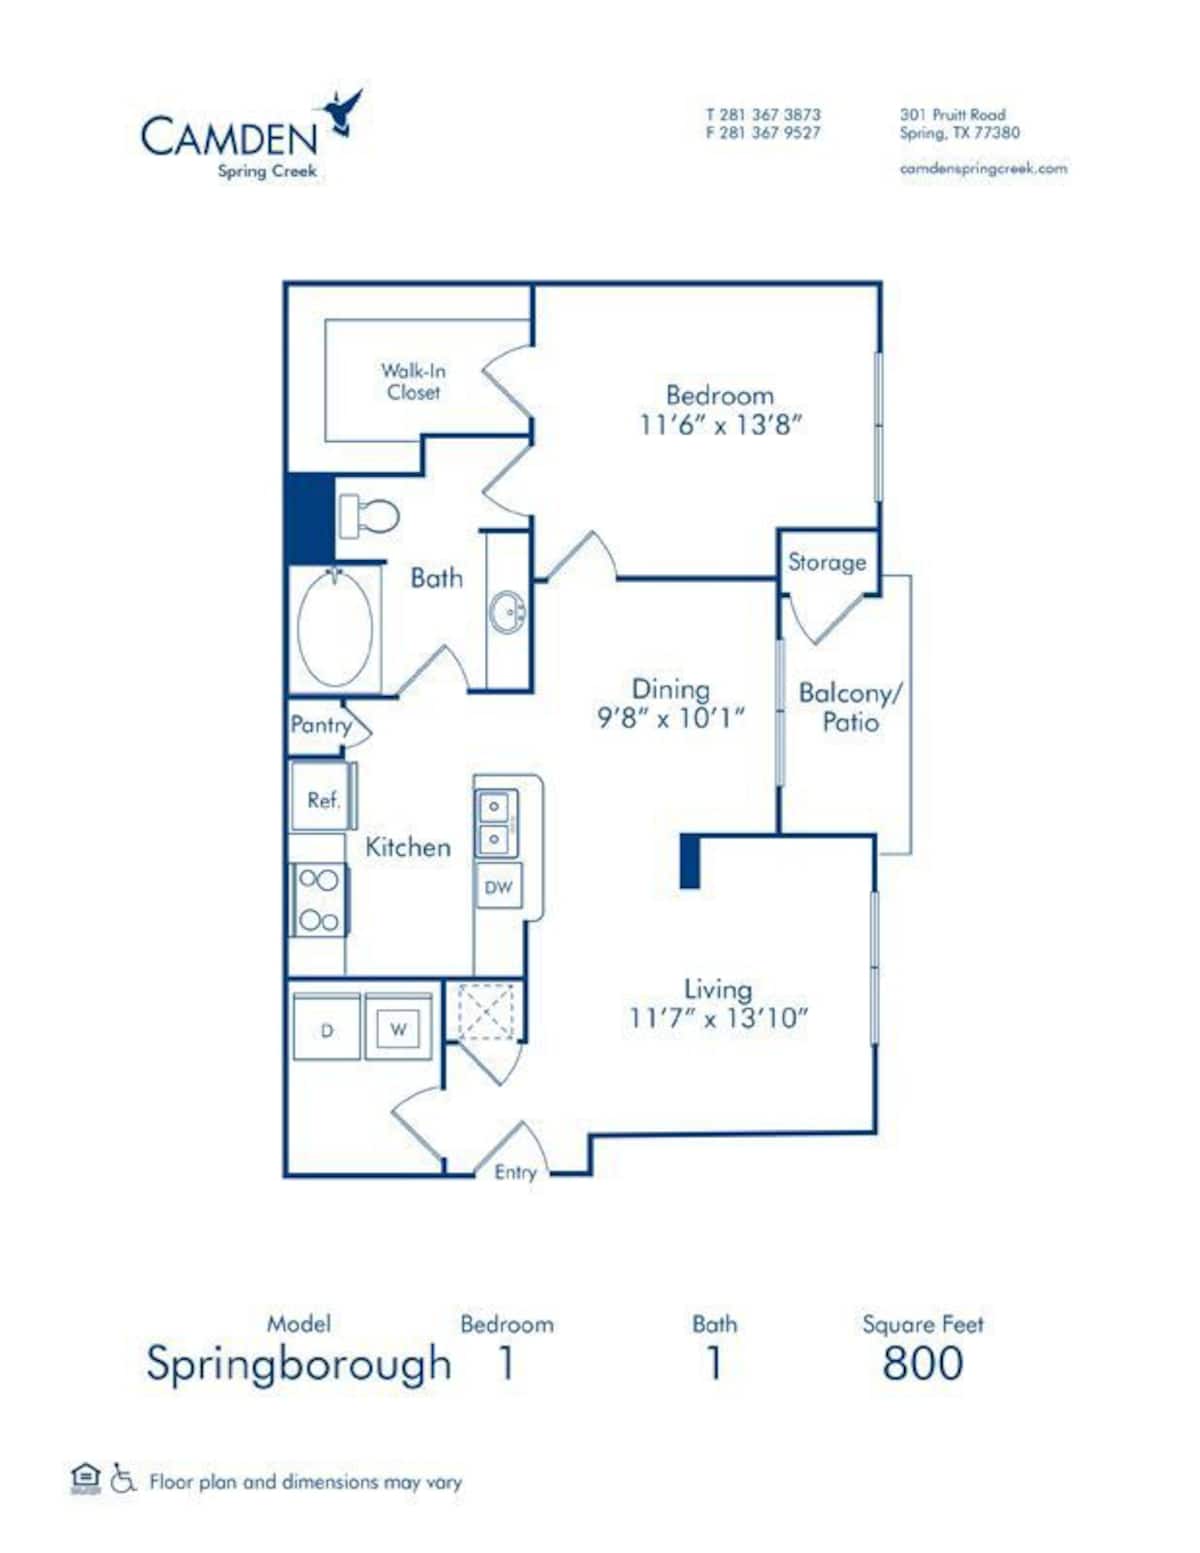 Floorplan diagram for Spring Borough, showing 1 bedroom